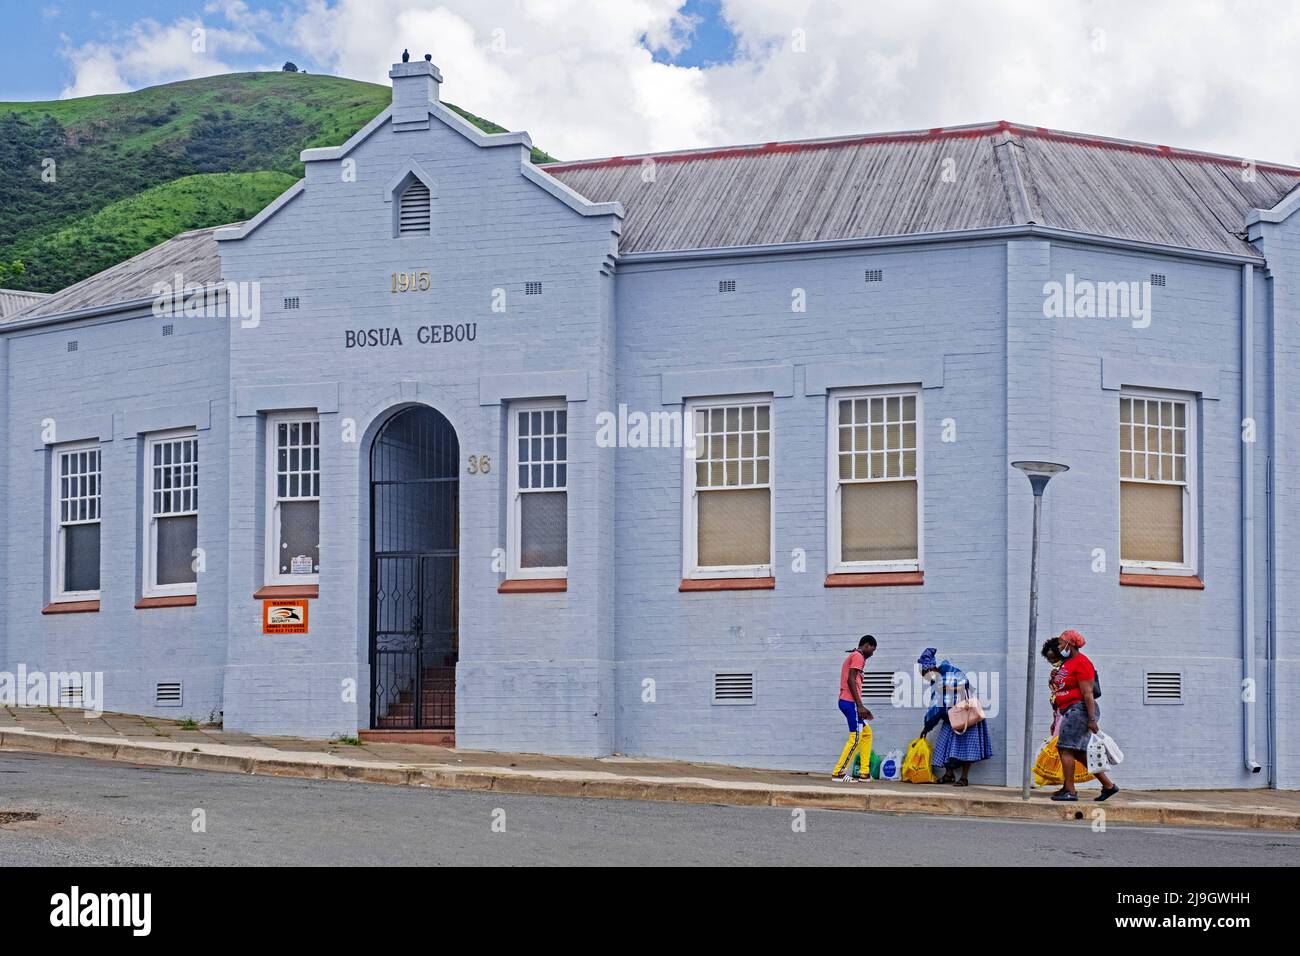 Bosua Gebou, colonial building in the town Barberton, Ehlanzeni, Mpumalanga province, South Africa Stock Photo